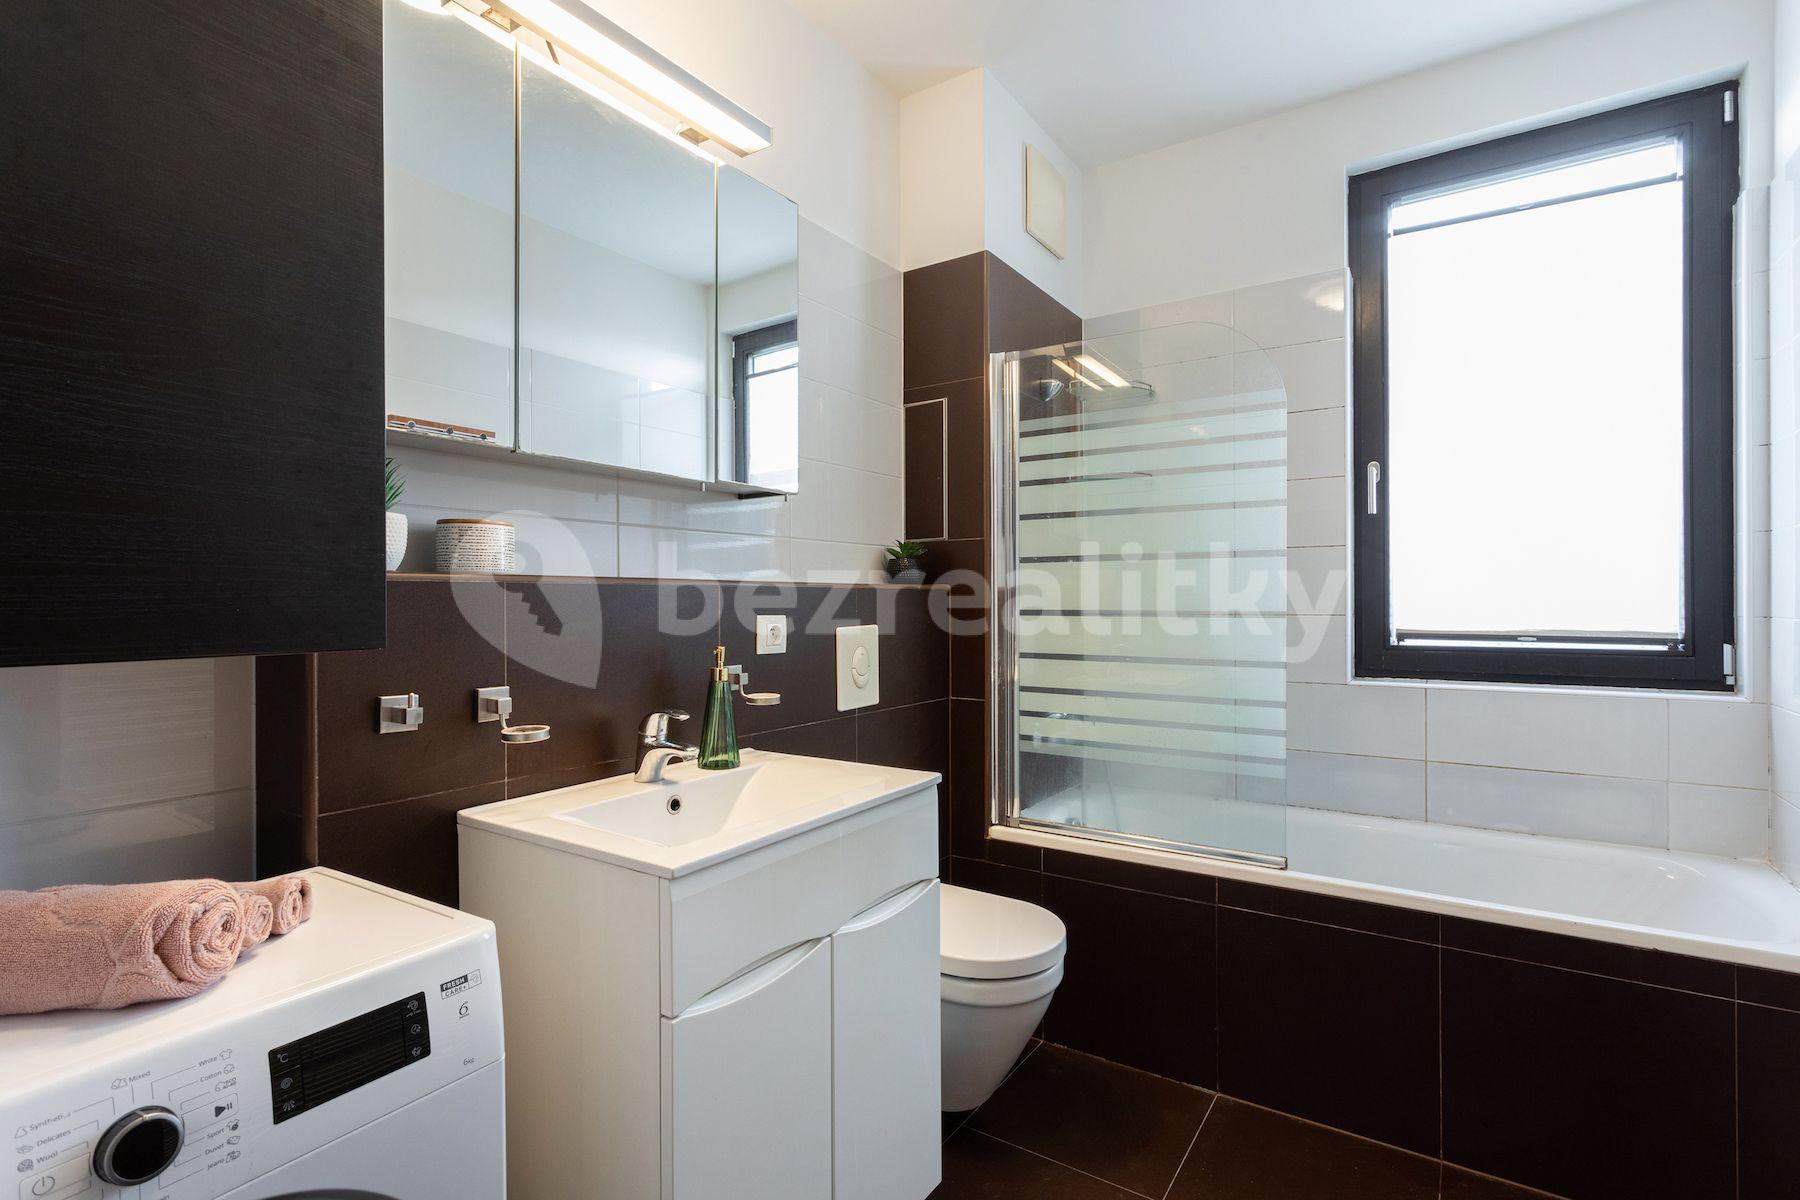 2 bedroom with open-plan kitchen flat for sale, 82 m², Sousedíkova, Prague, Prague